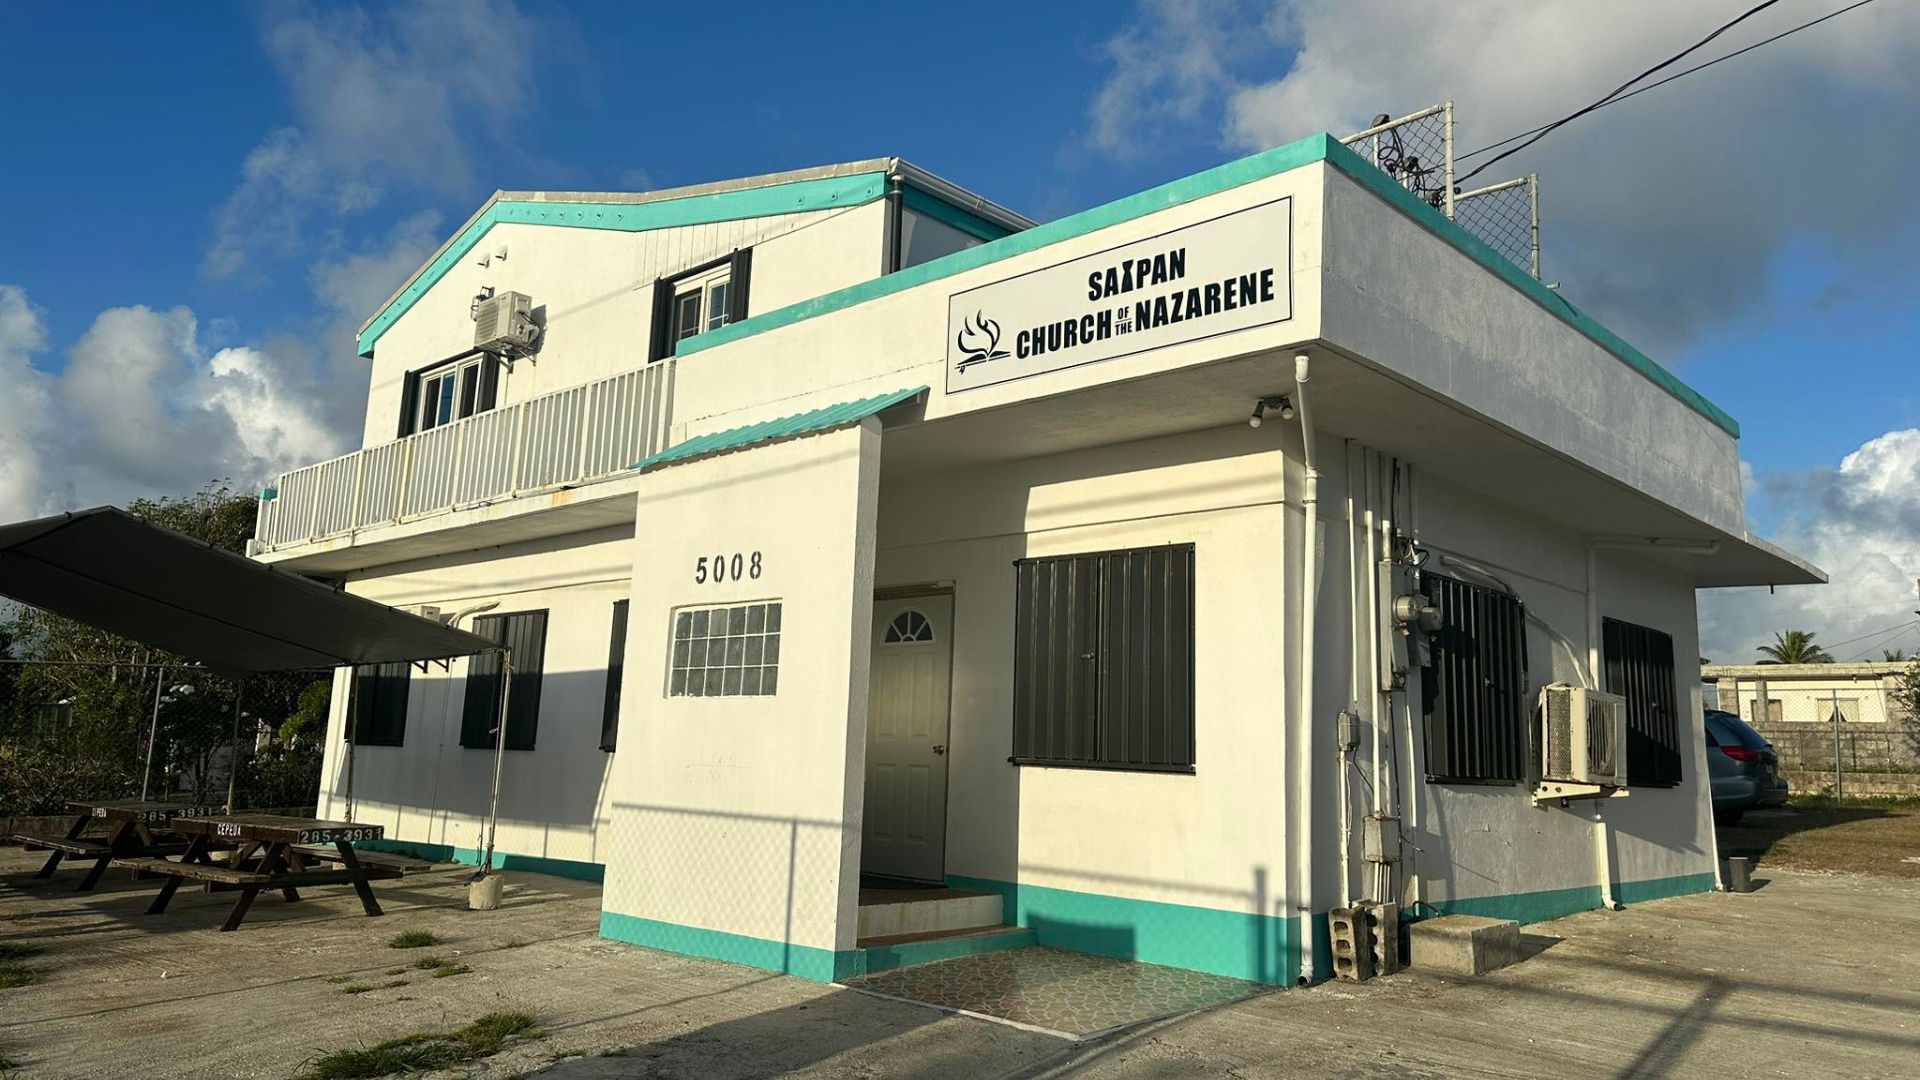 Living Hope Church of the Nazarene in Saipan dedicates its church building